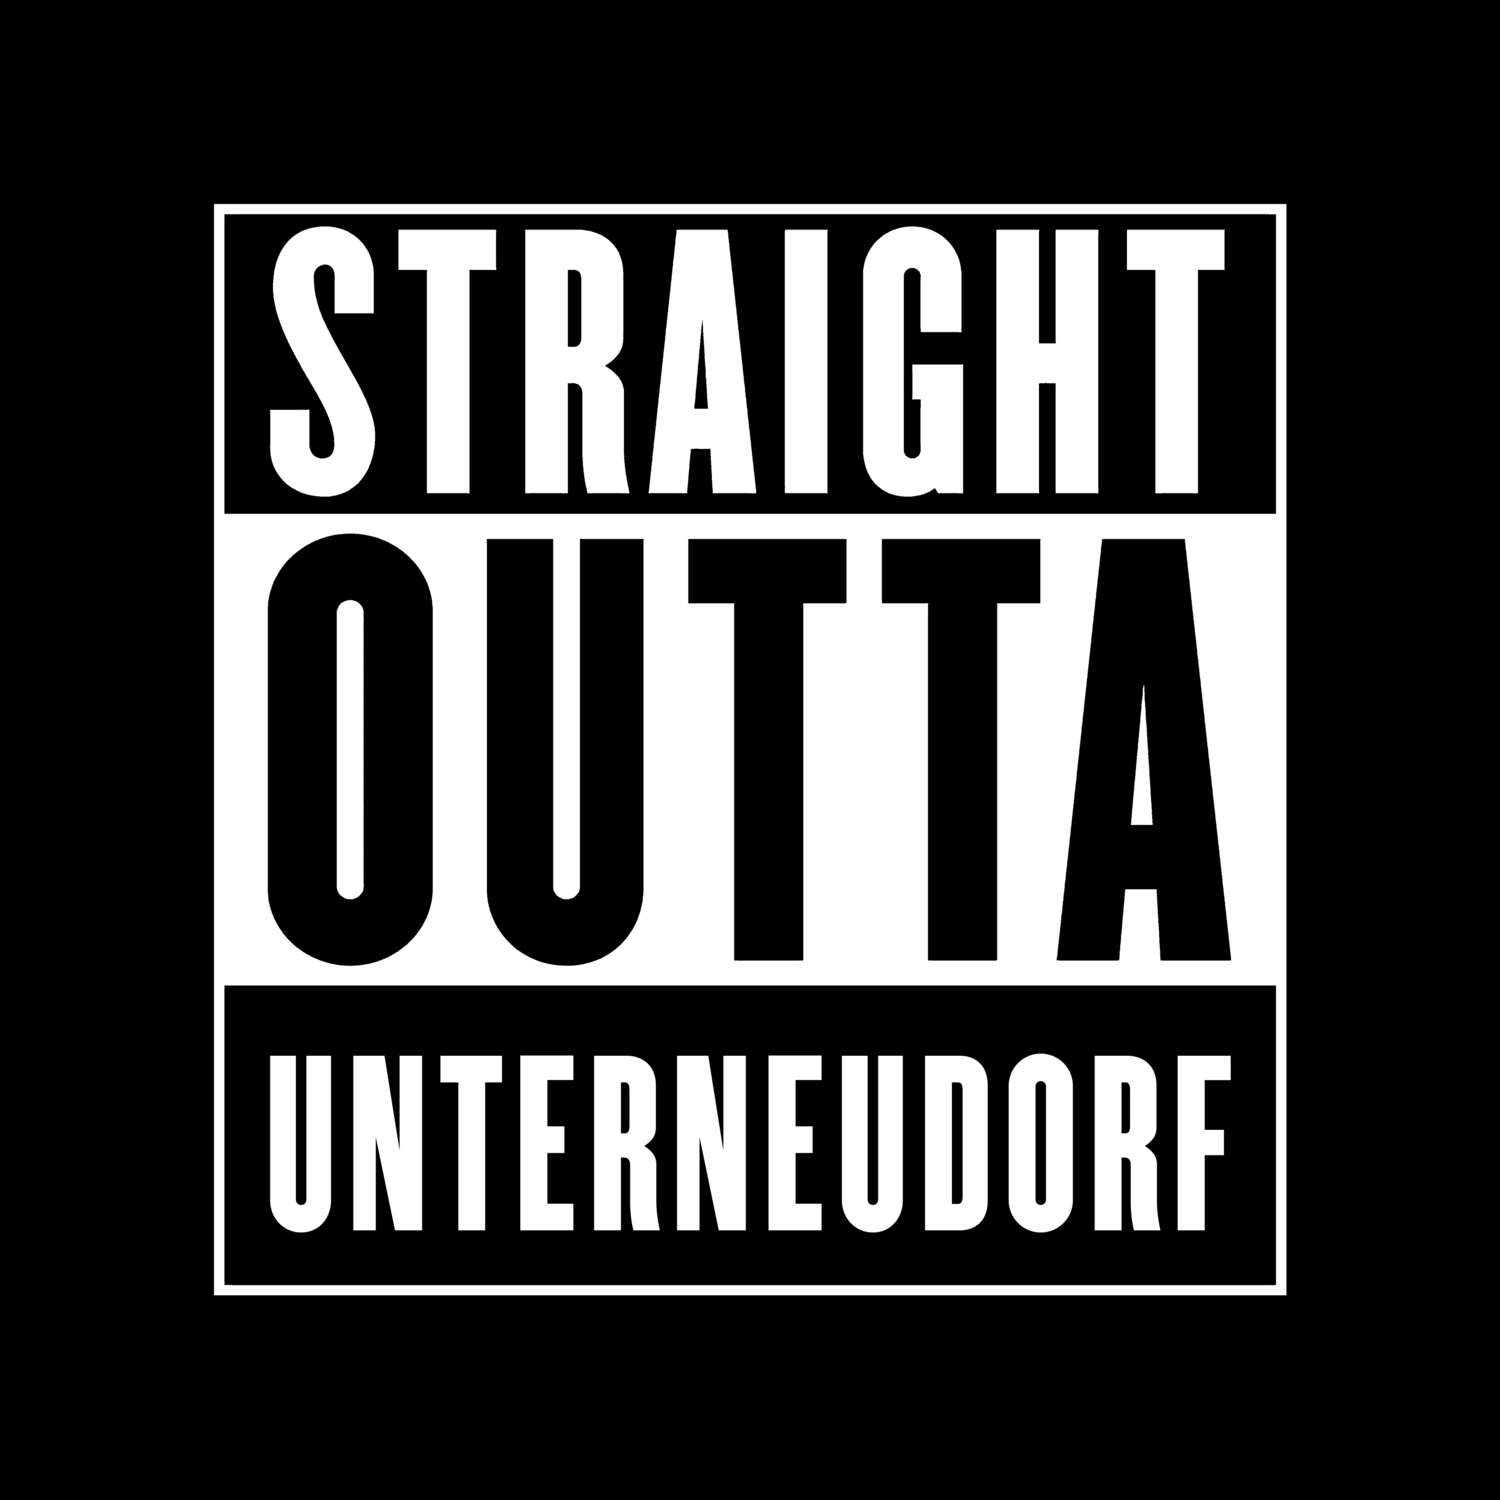 Unterneudorf T-Shirt »Straight Outta«